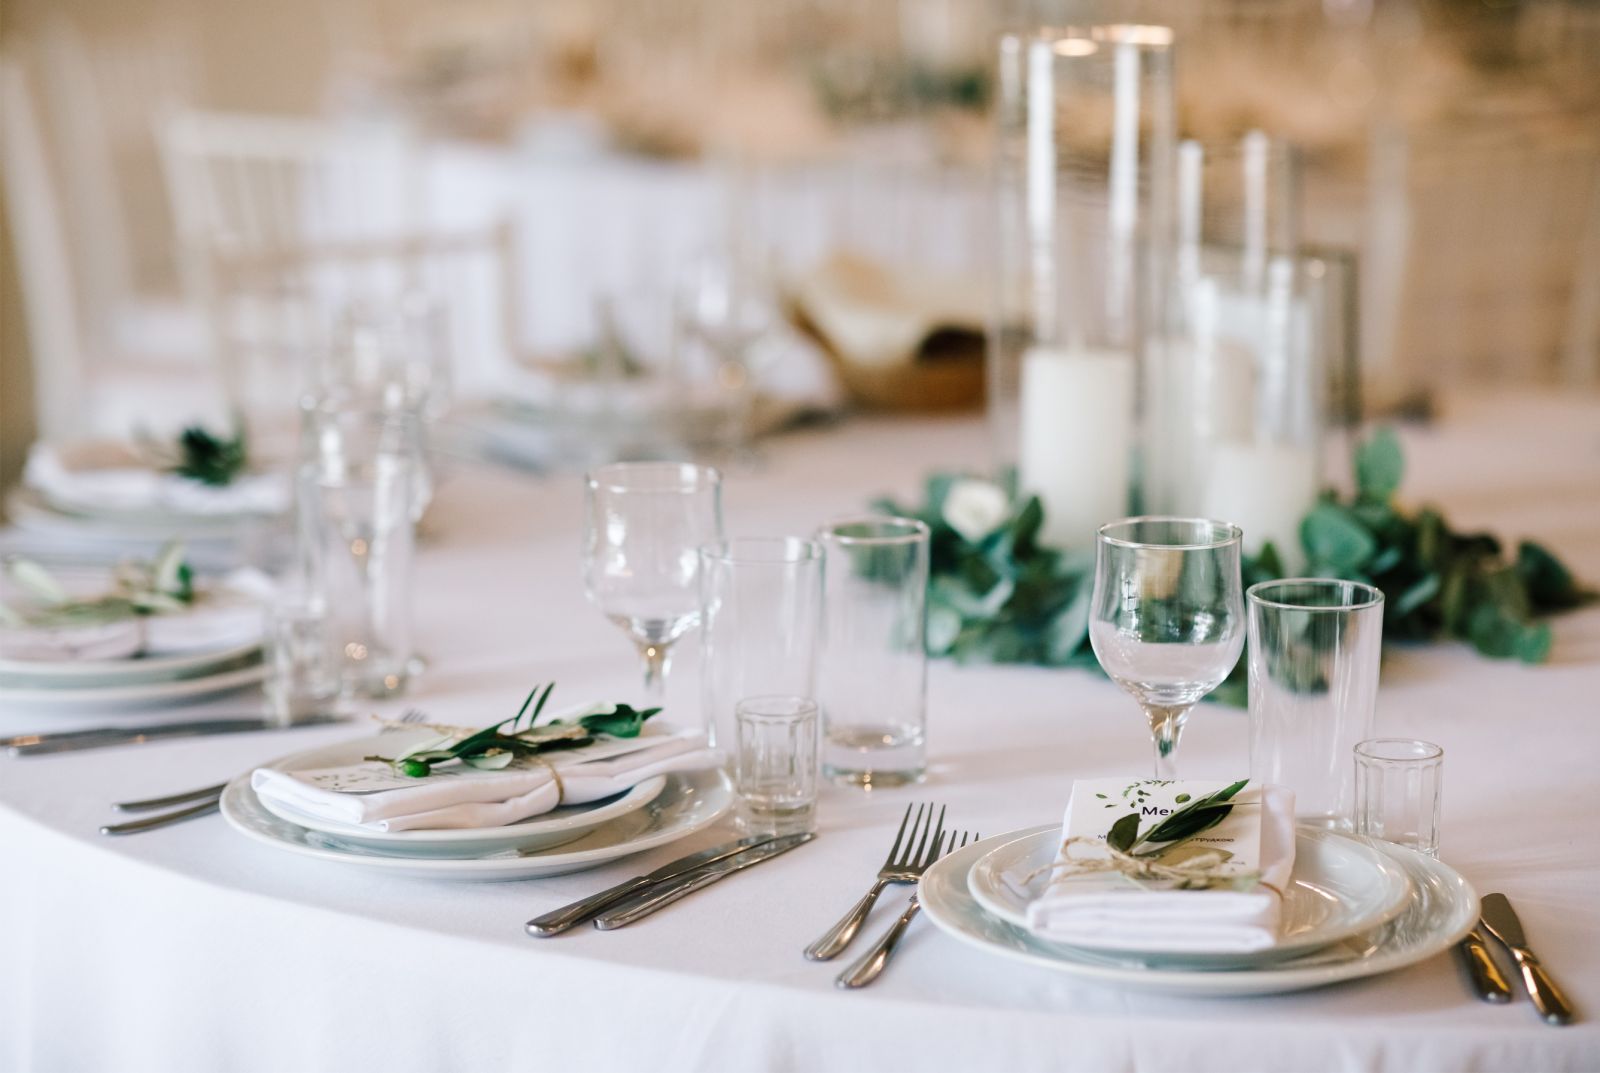 Details of a wedding dinner table set